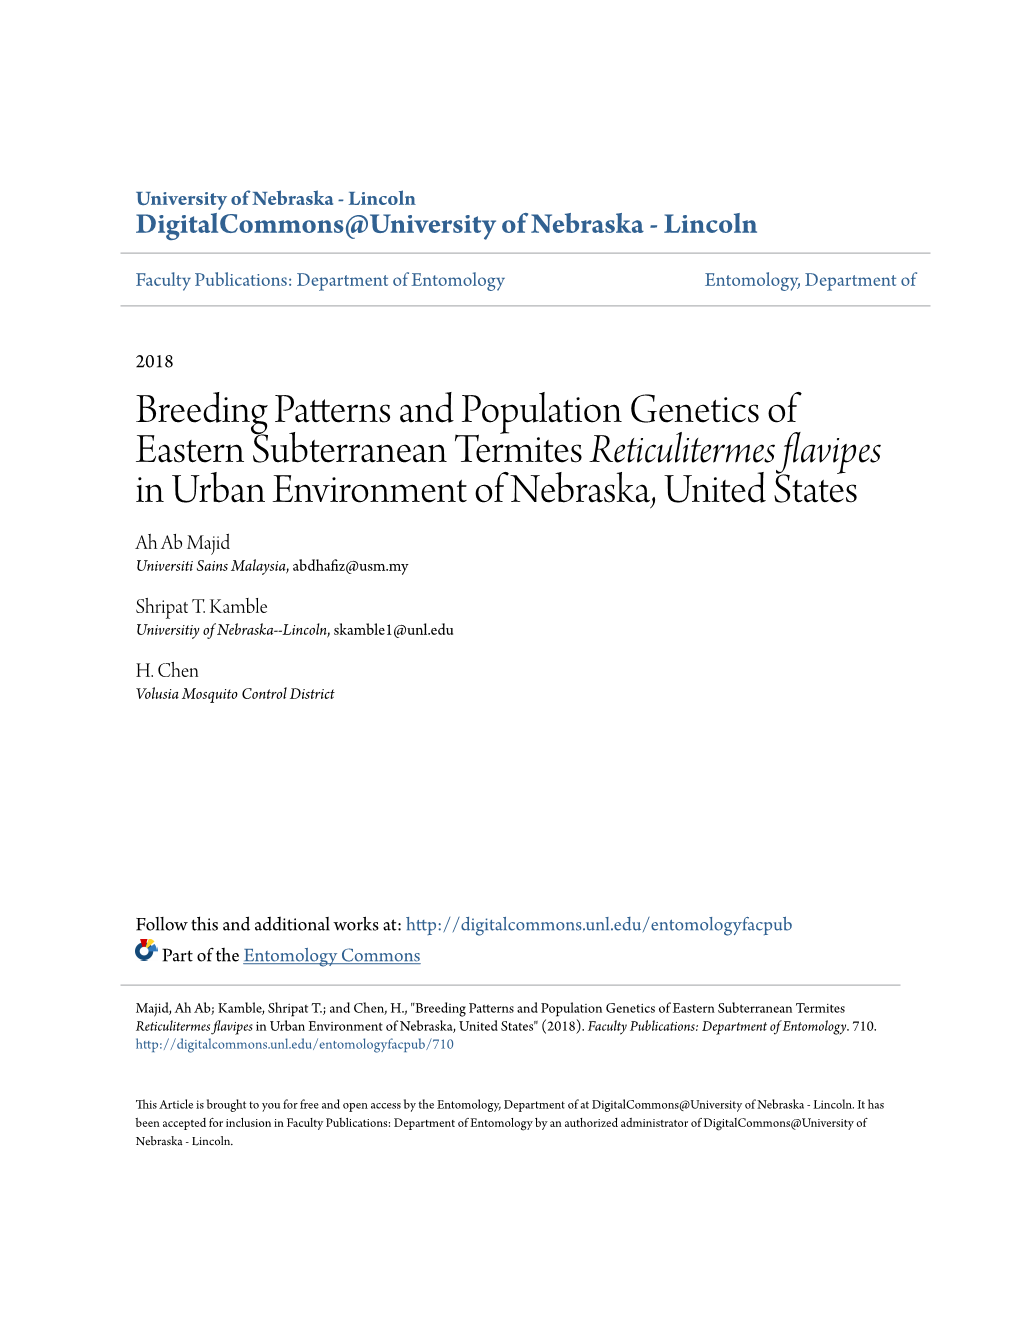 Breeding Patterns and Population Genetics of Eastern Subterranean